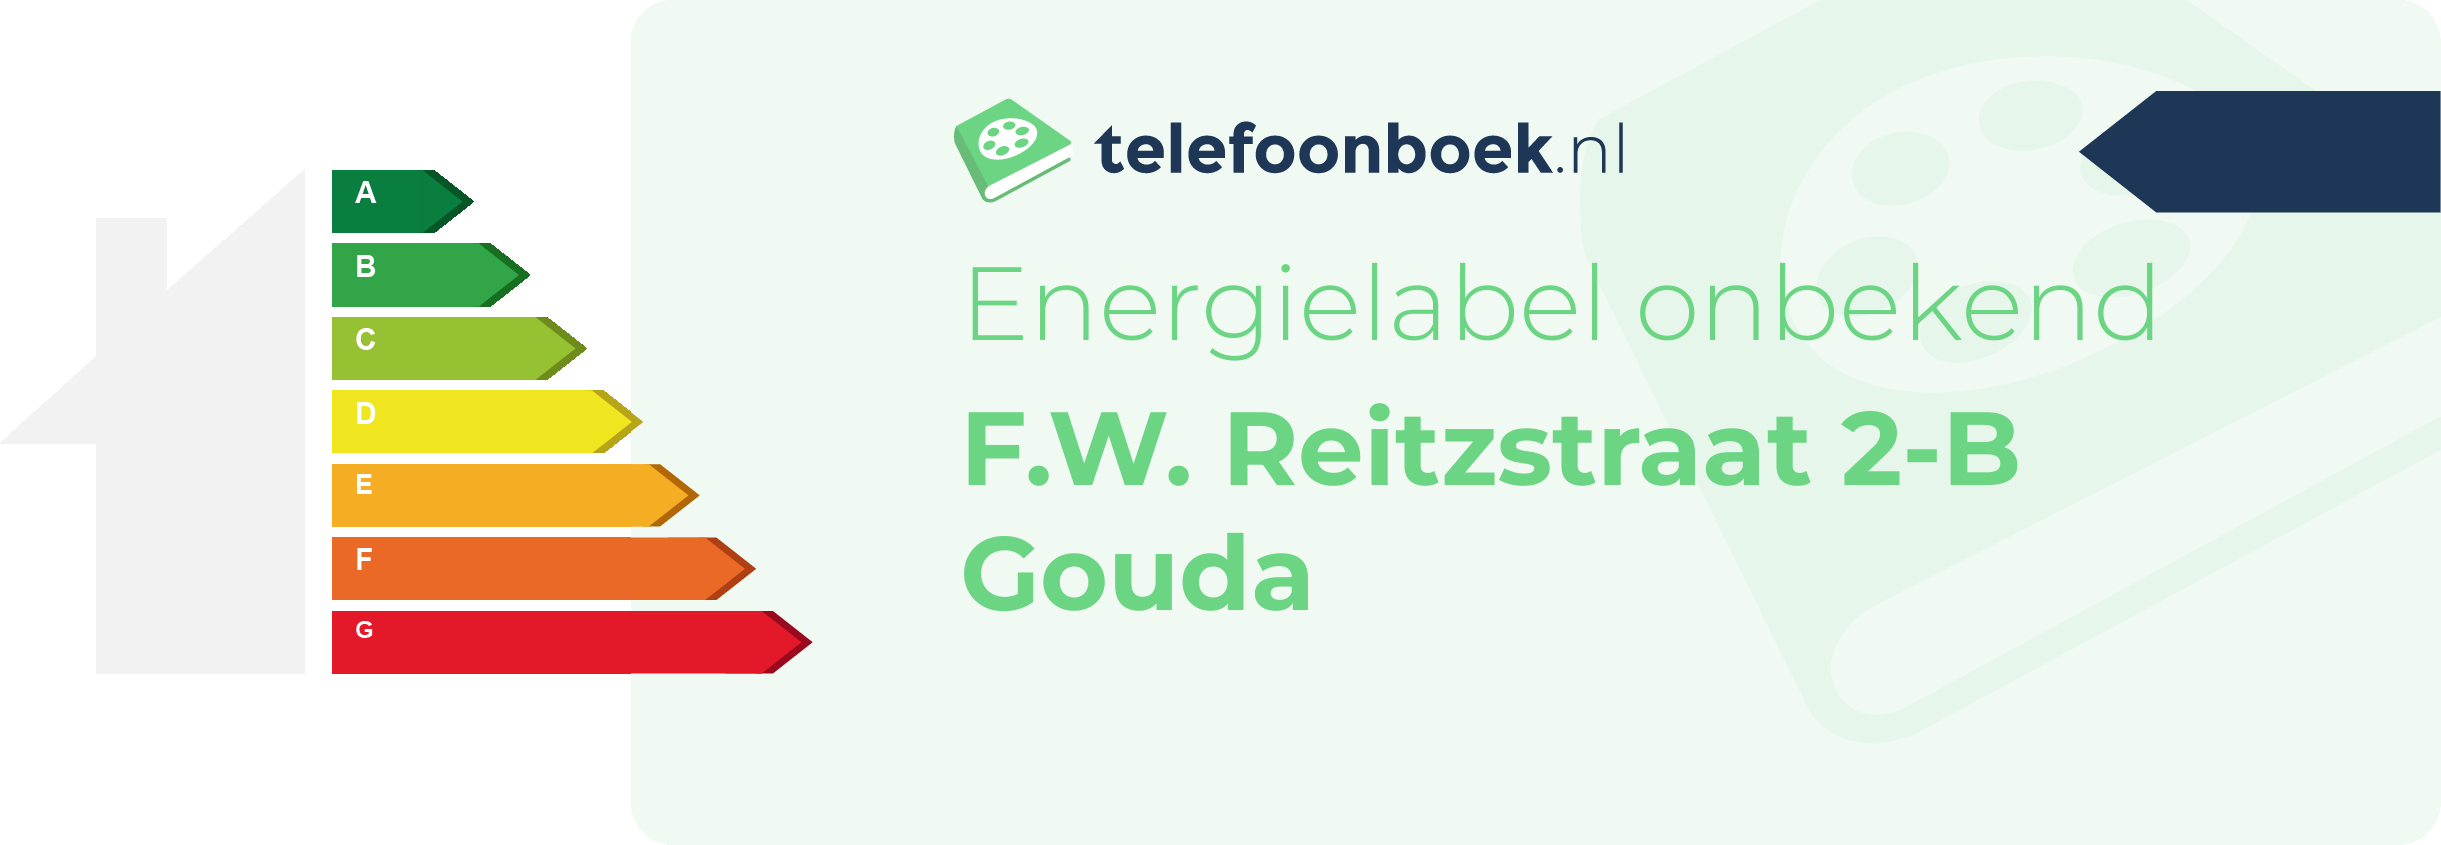 Energielabel F.W. Reitzstraat 2-B Gouda